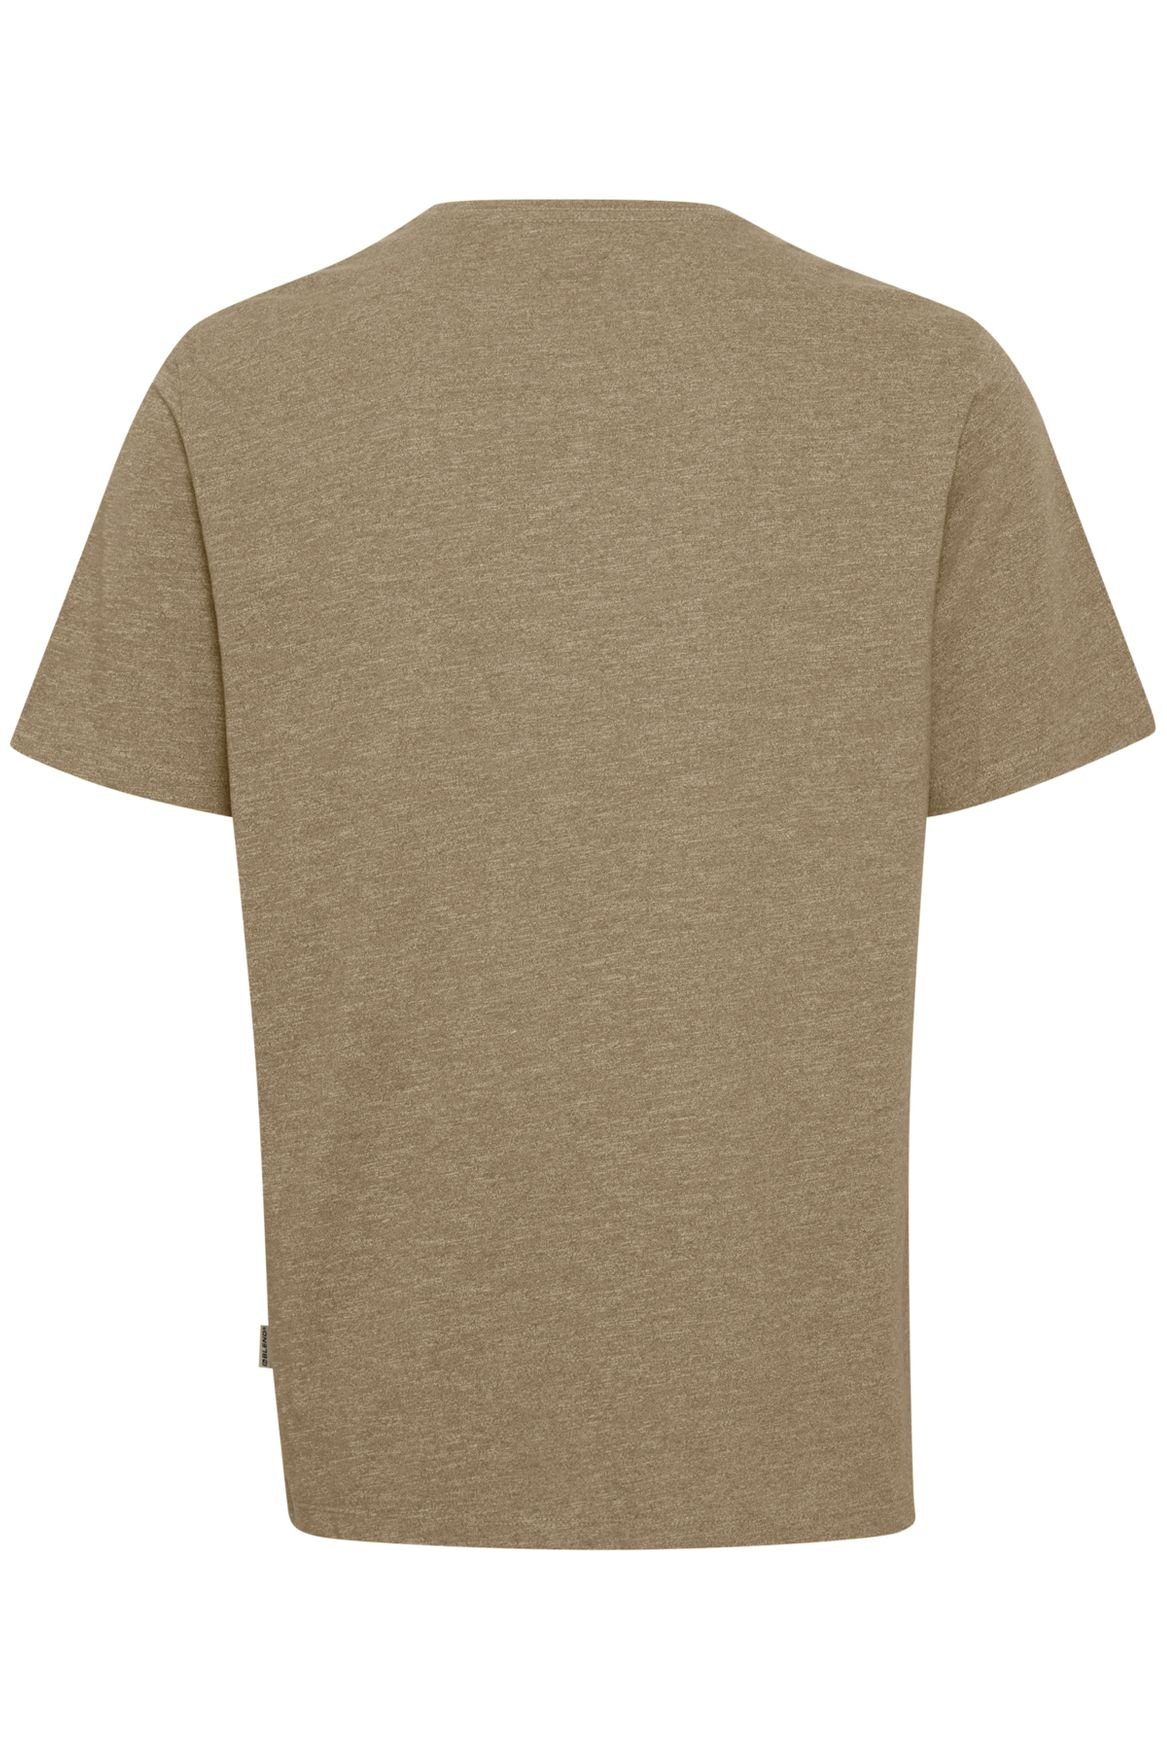 Kurzarm Stretch Rundhals Beige BHWilton T-Shirt in Blend 5030 T-Shirt Shirt